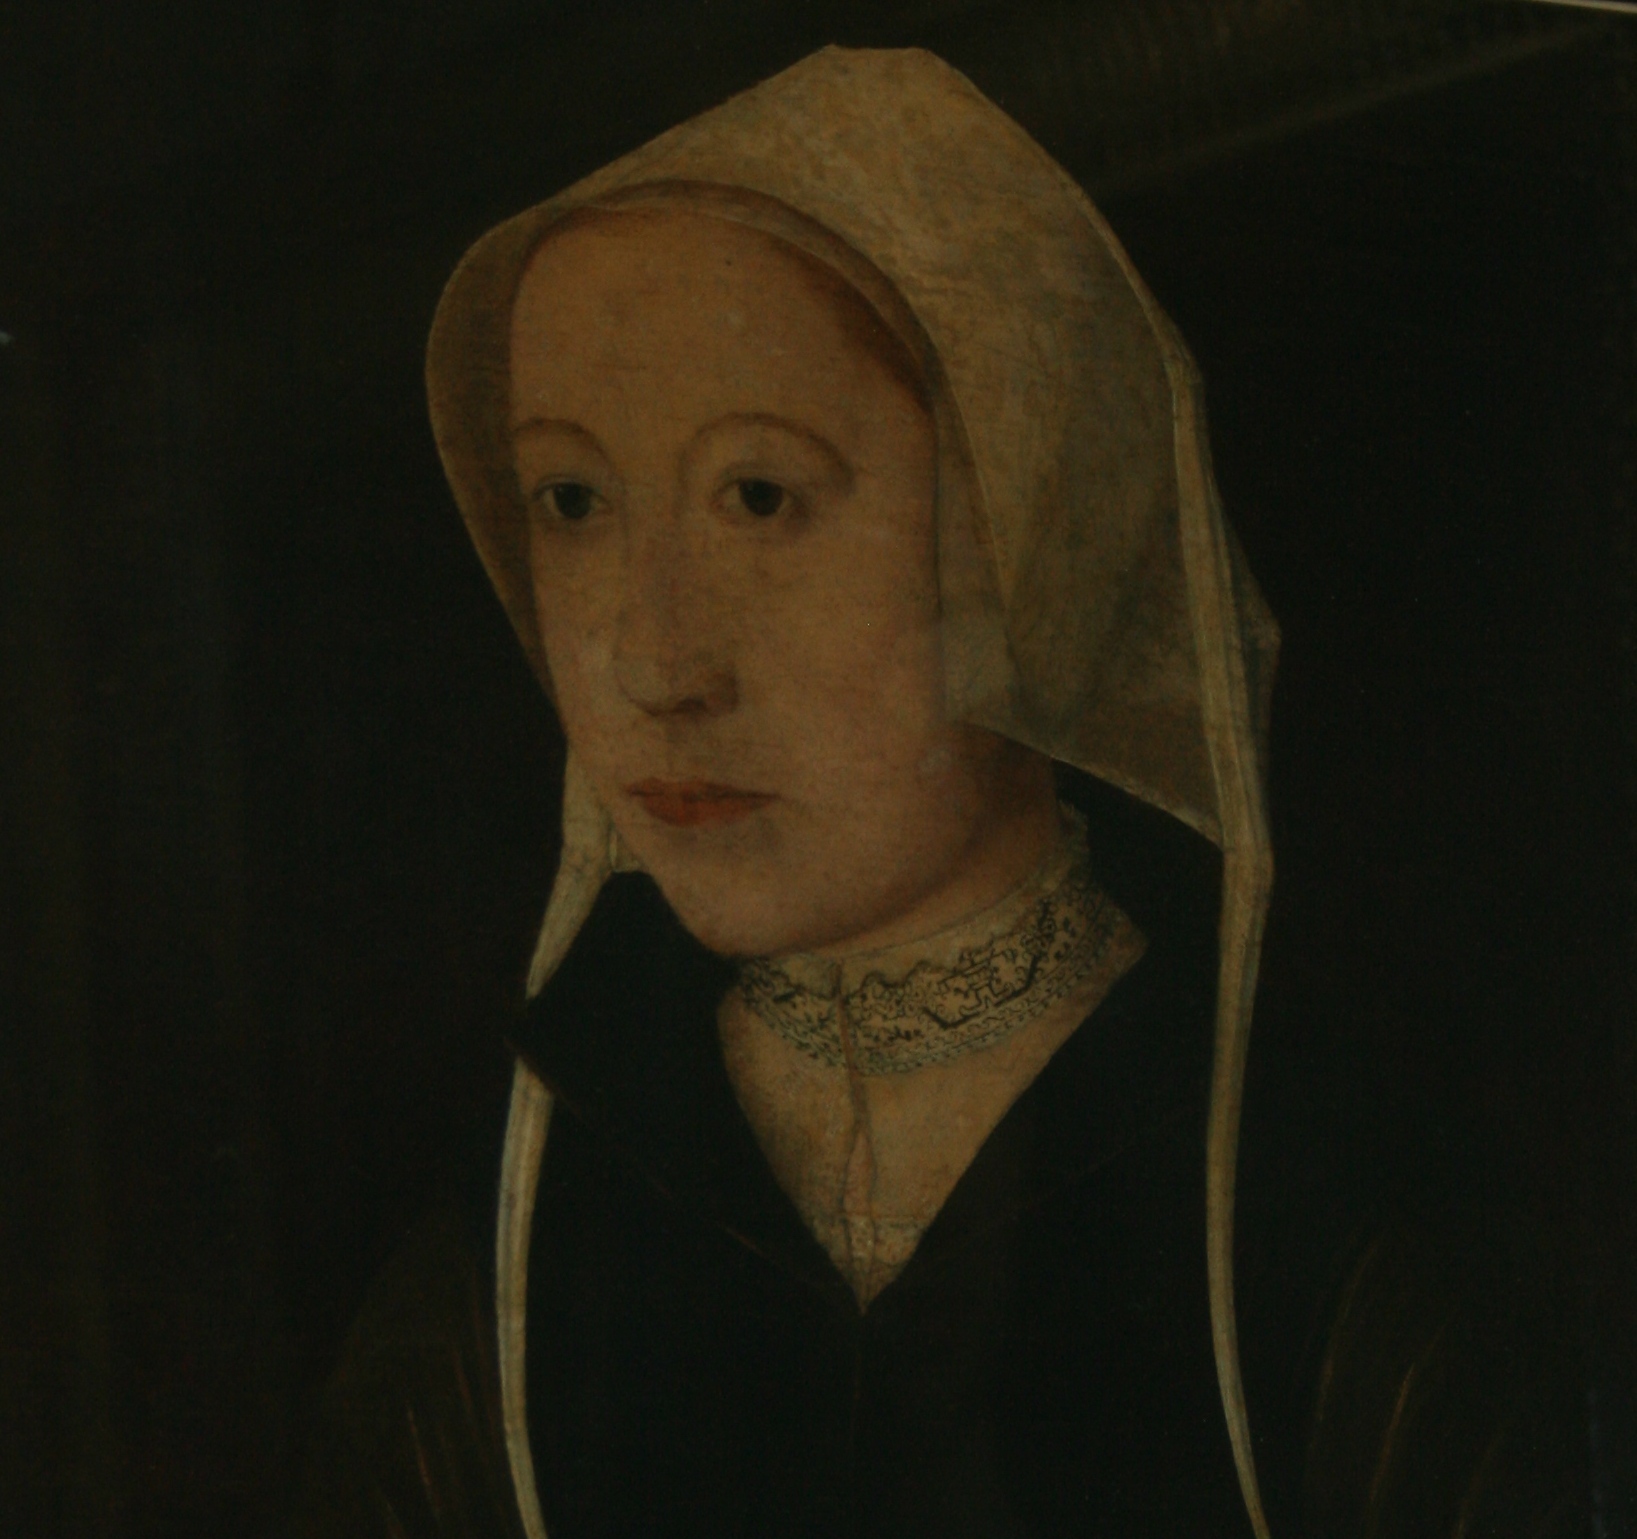 Margaret, Countess of Lennox.